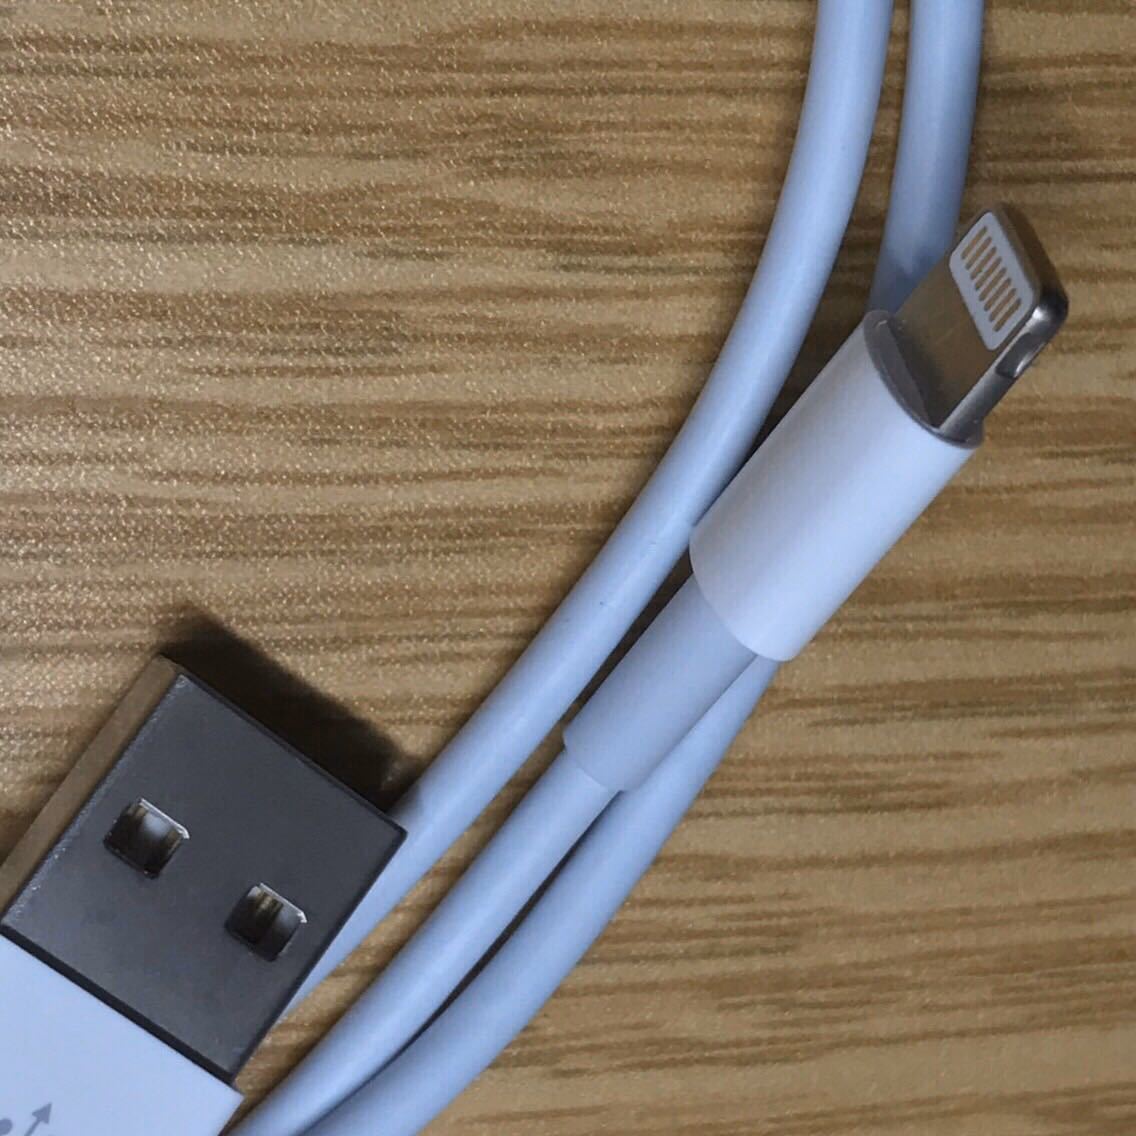 iPhone 充電器 充電ケーブル コード lightning cable 急速充電 高速充電 ライトニングケーブル データ転送 充電ケーブル USBケーブル